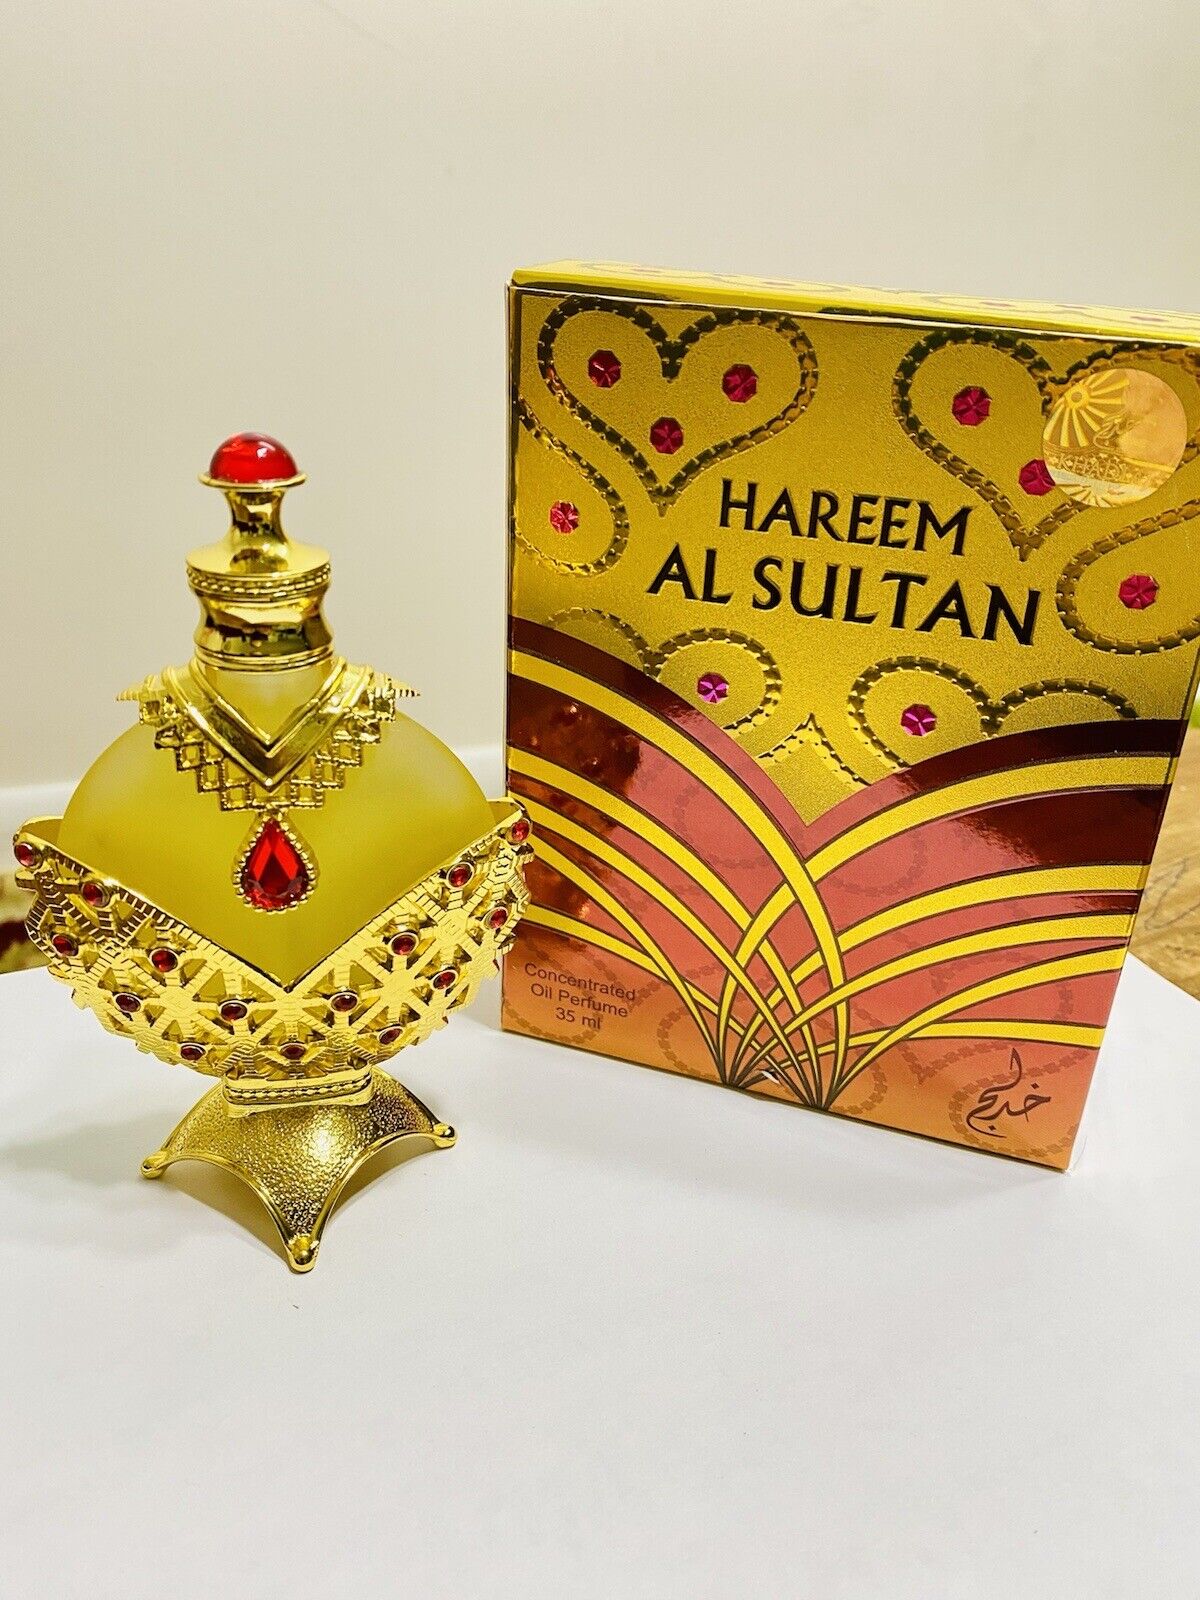 Aceite de perfume Hareem Al Sultan Gold - 35 ML de Khadlaj